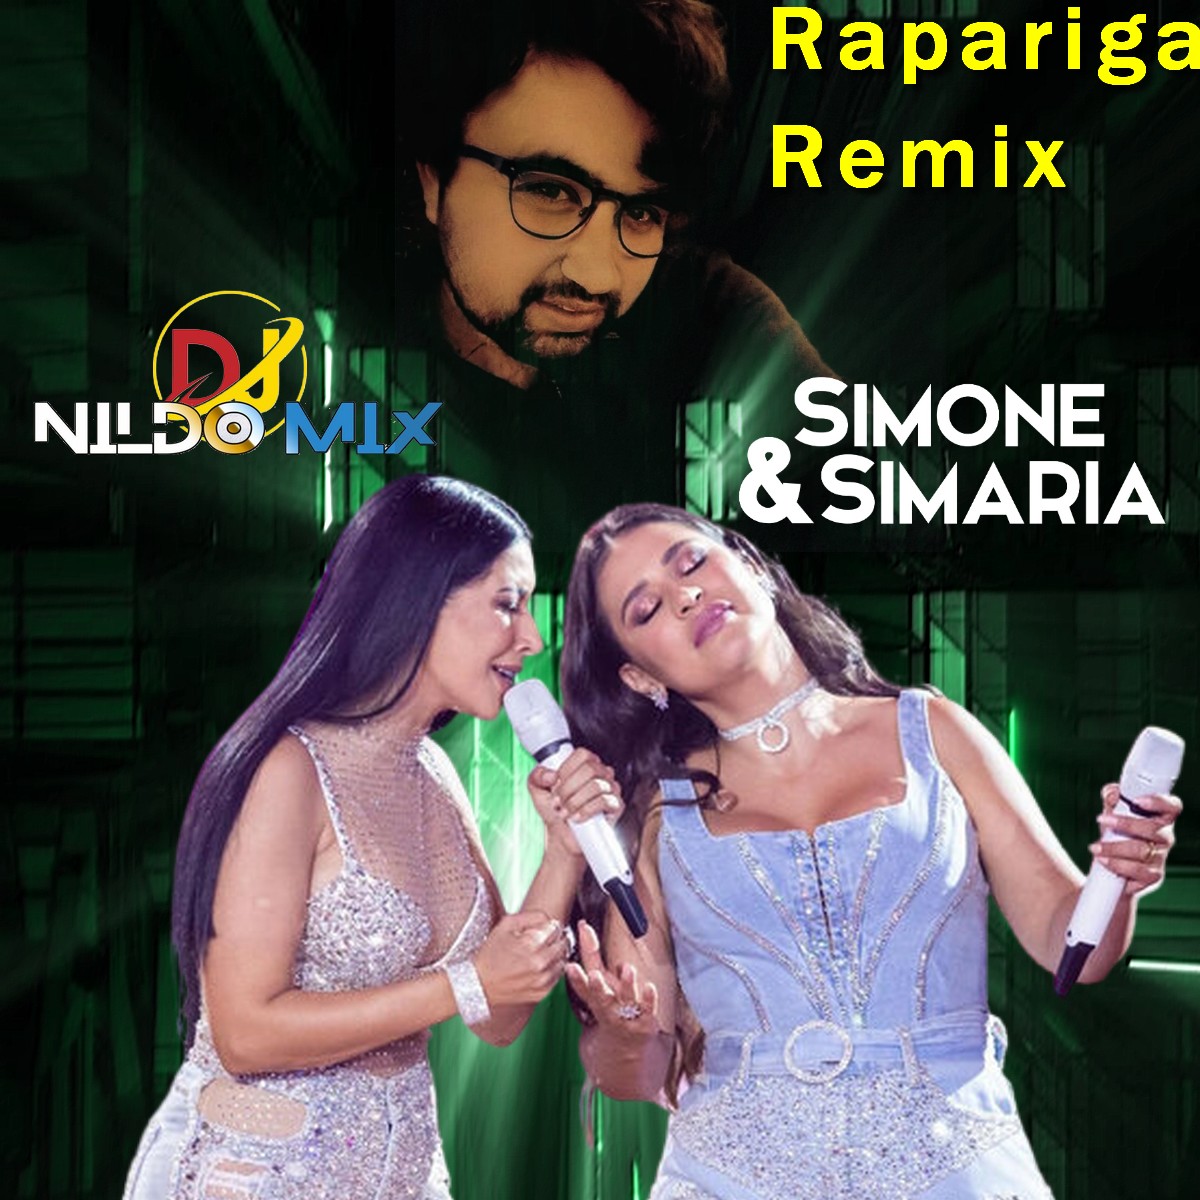 Simone & Simaria – Rapariga Remix Dj Nildo Mix